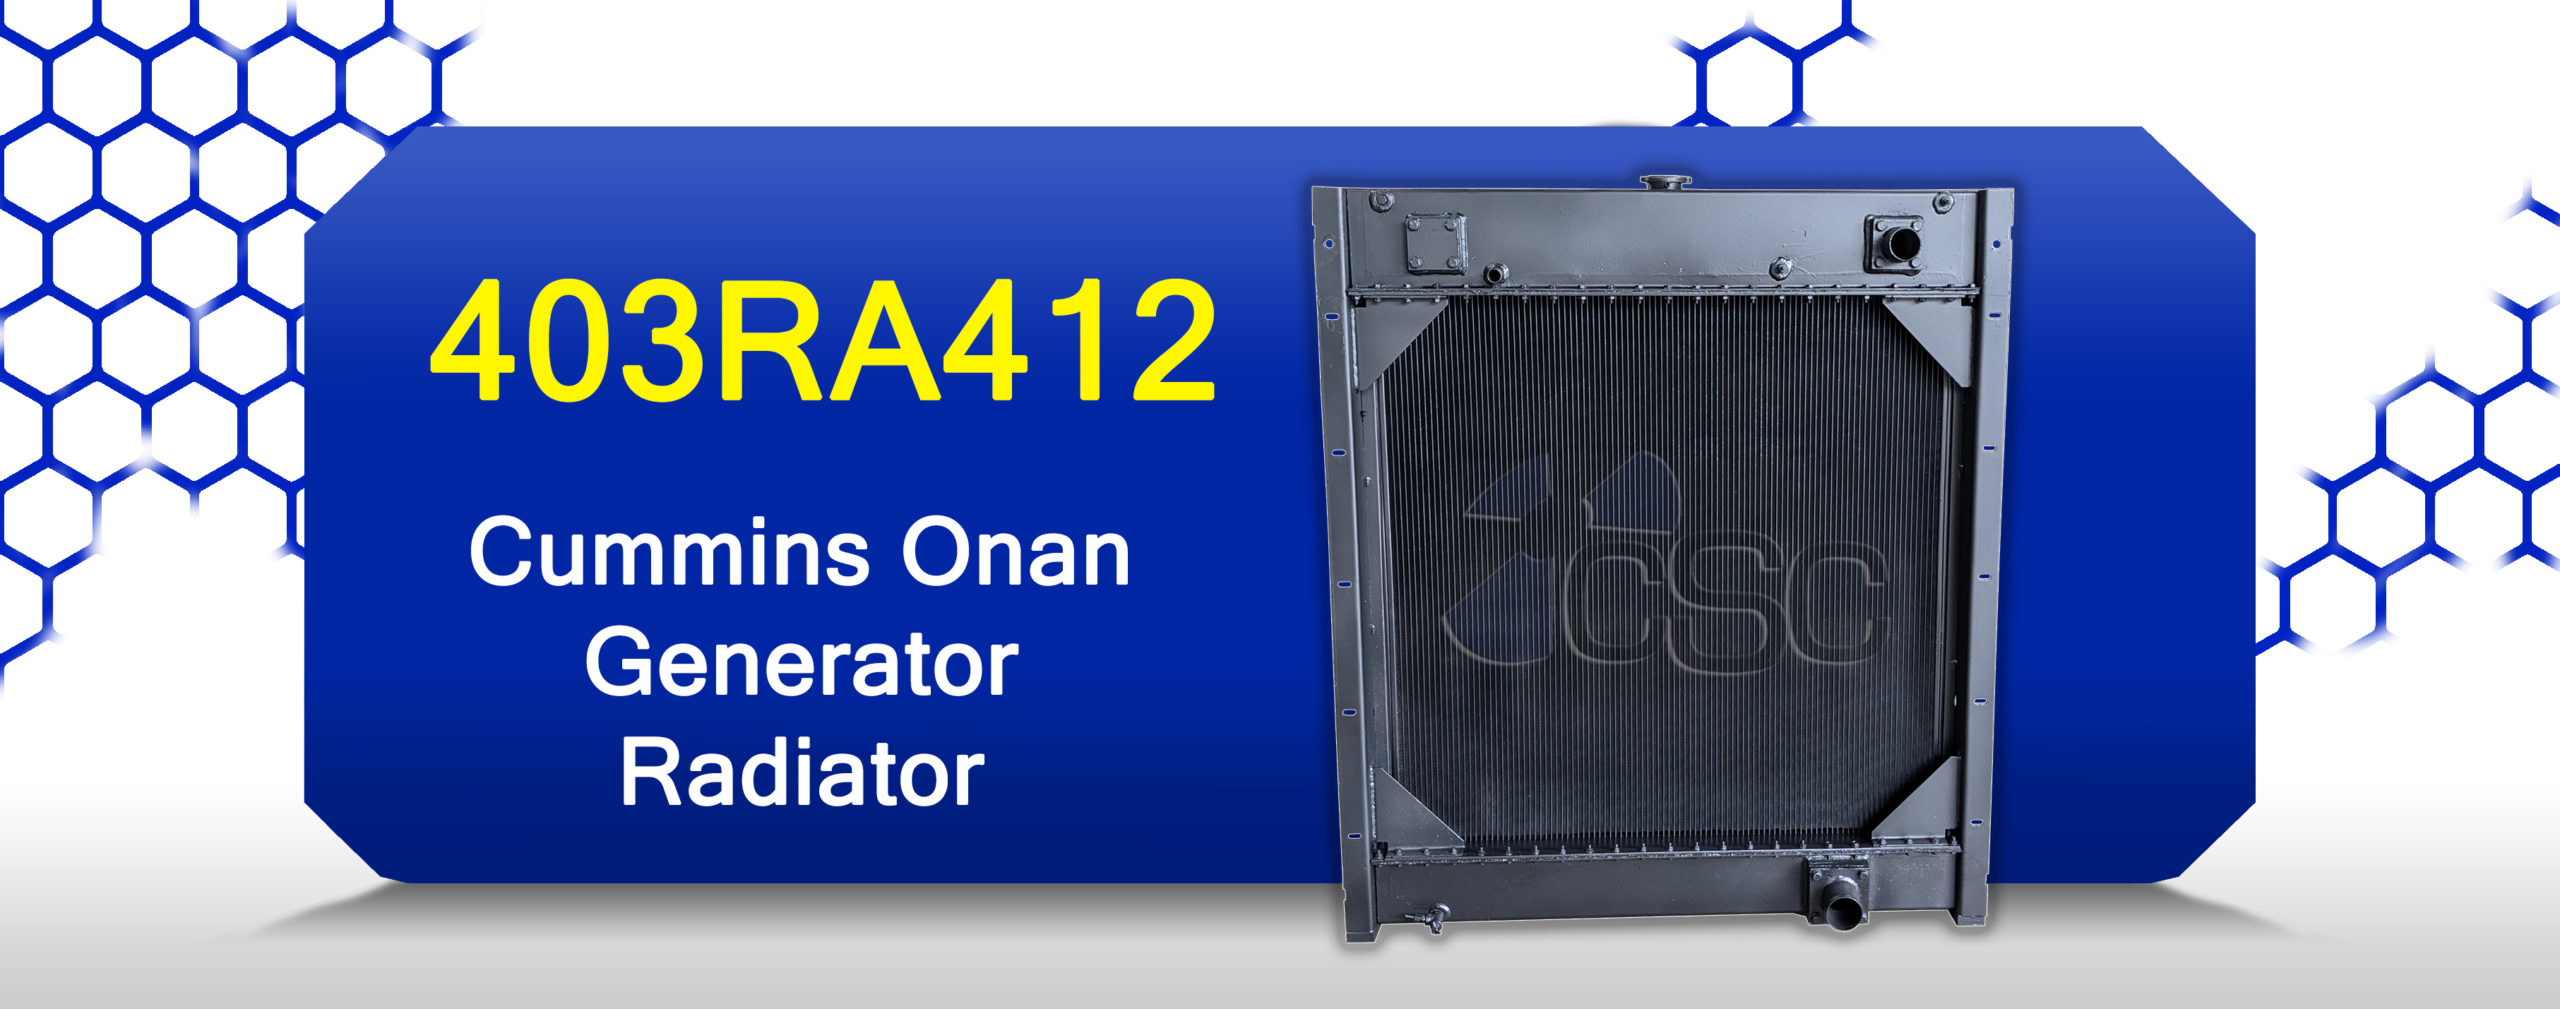 Presenting the 403RA412 Cummins Onan generator radiator